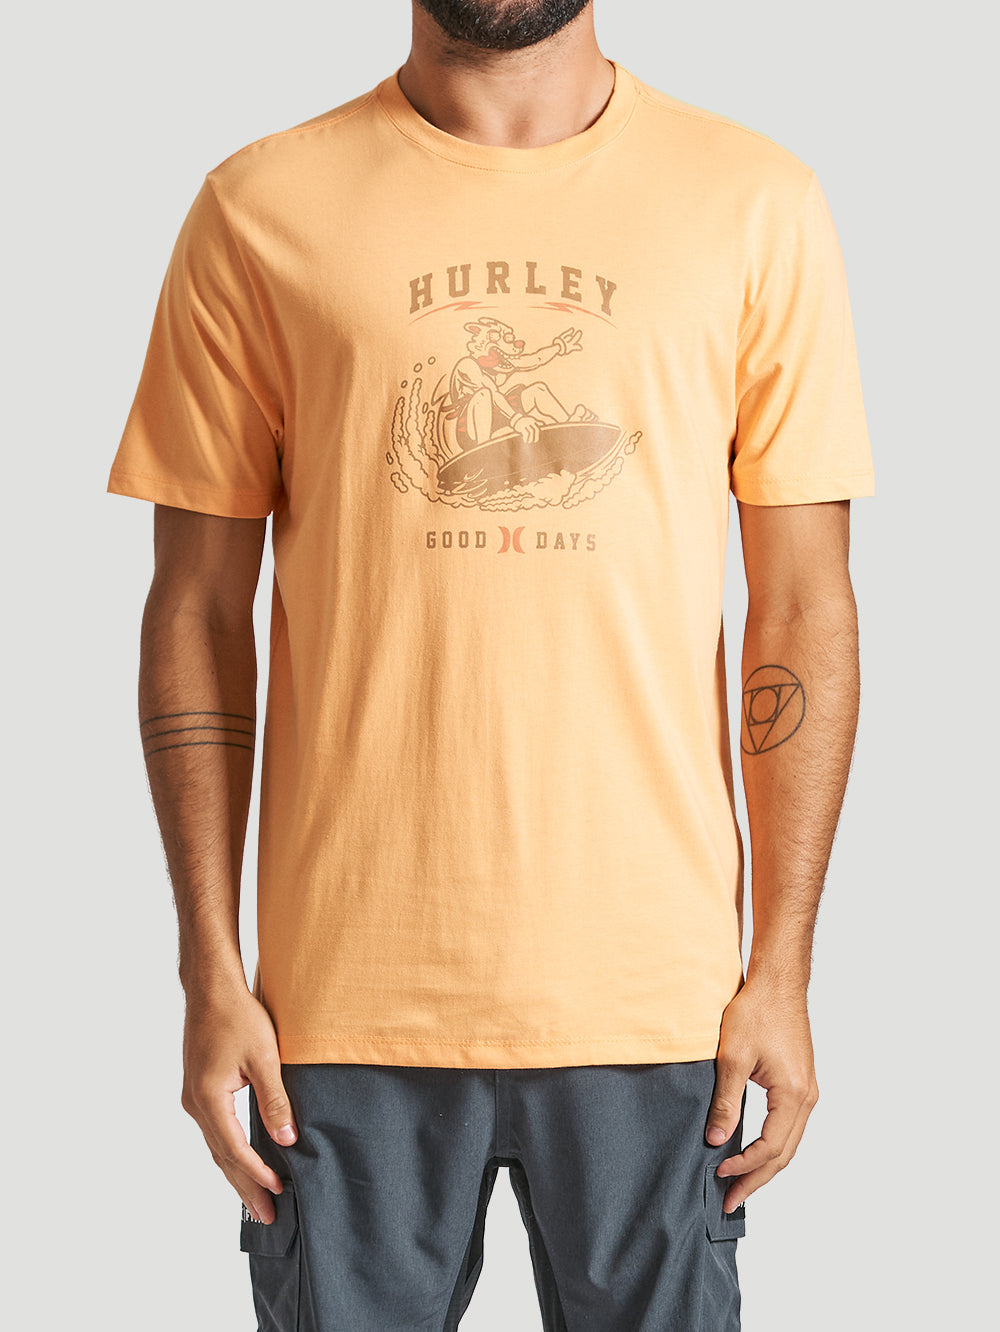 Camiseta Hurley Good Days Laranja